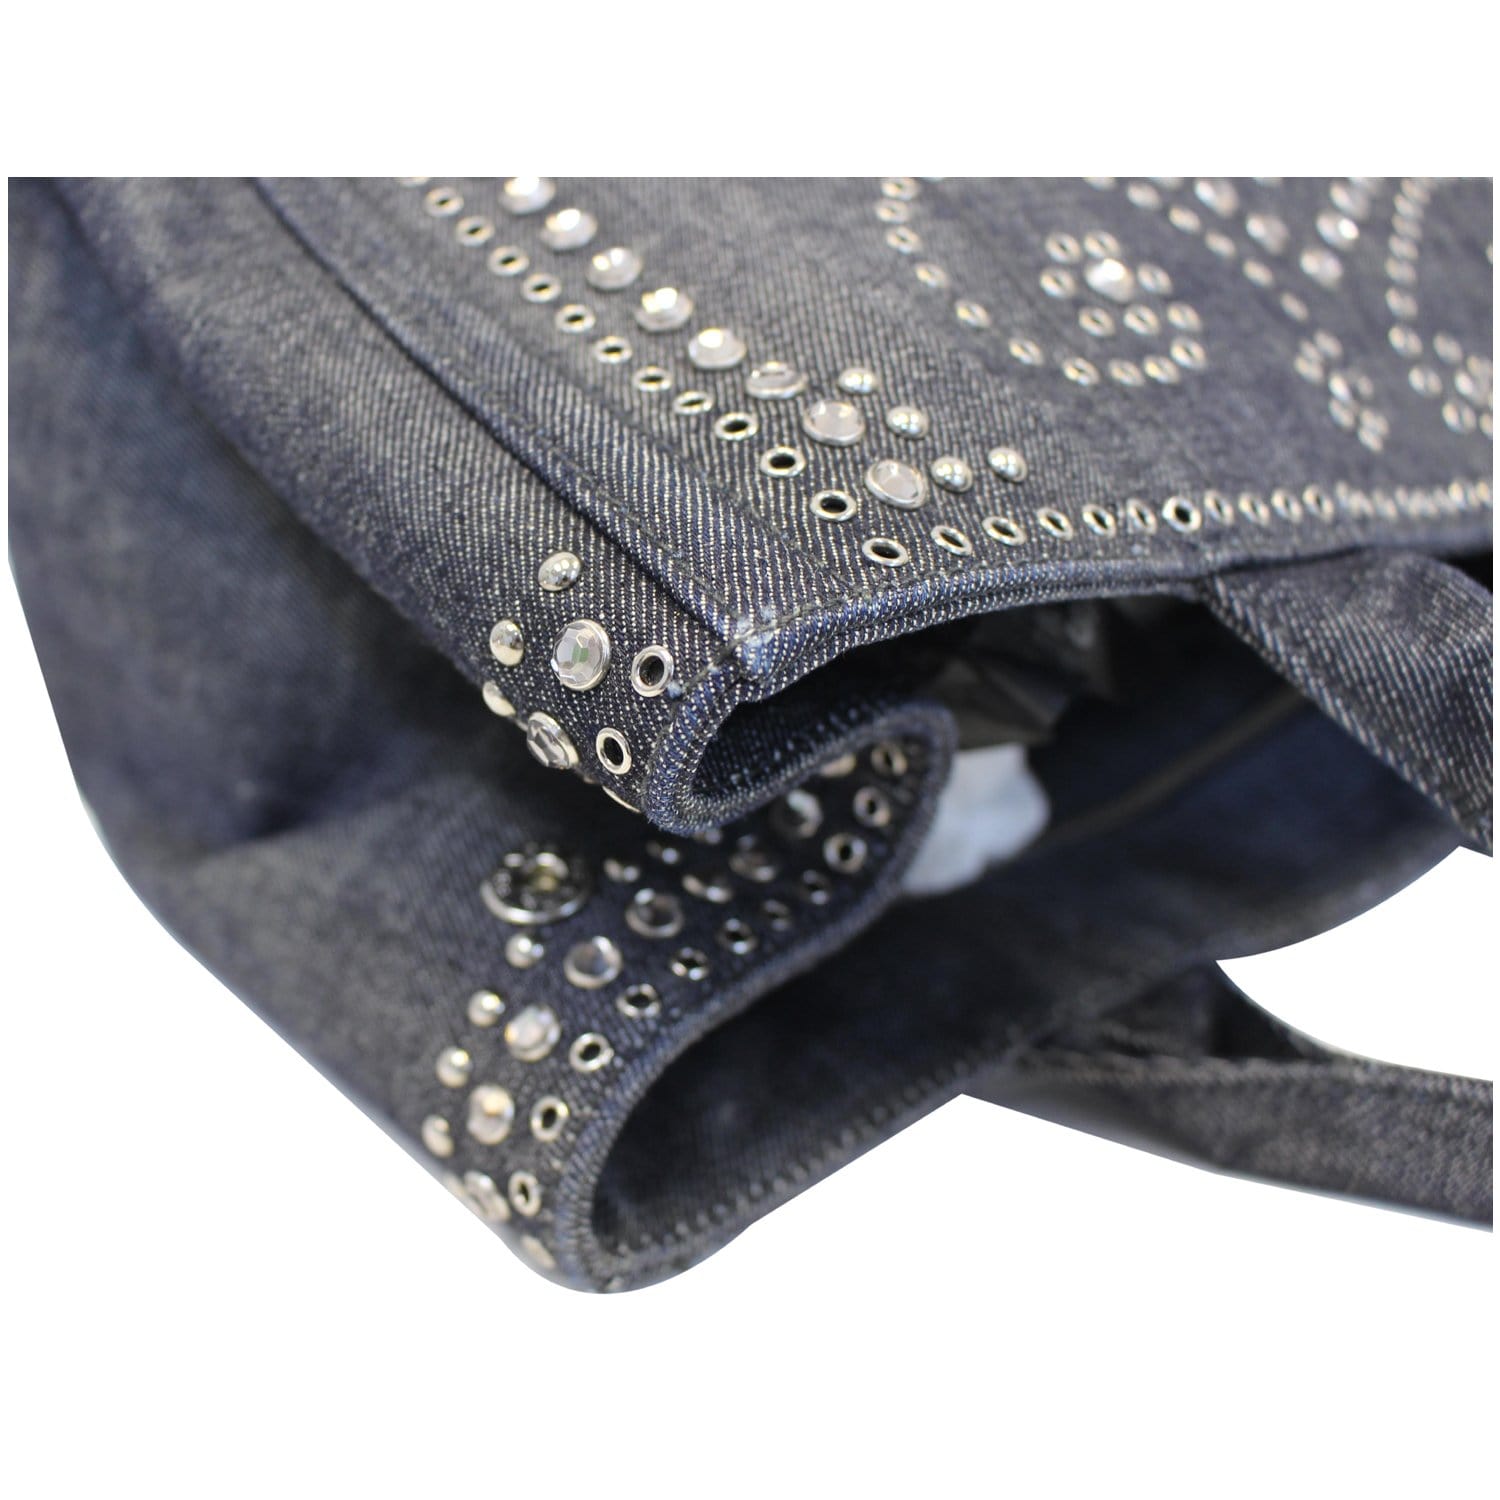 Prada Canapa Tote Bag Handbag Denim Women fur W40.5×H28×D25cm w/ guarantee  car